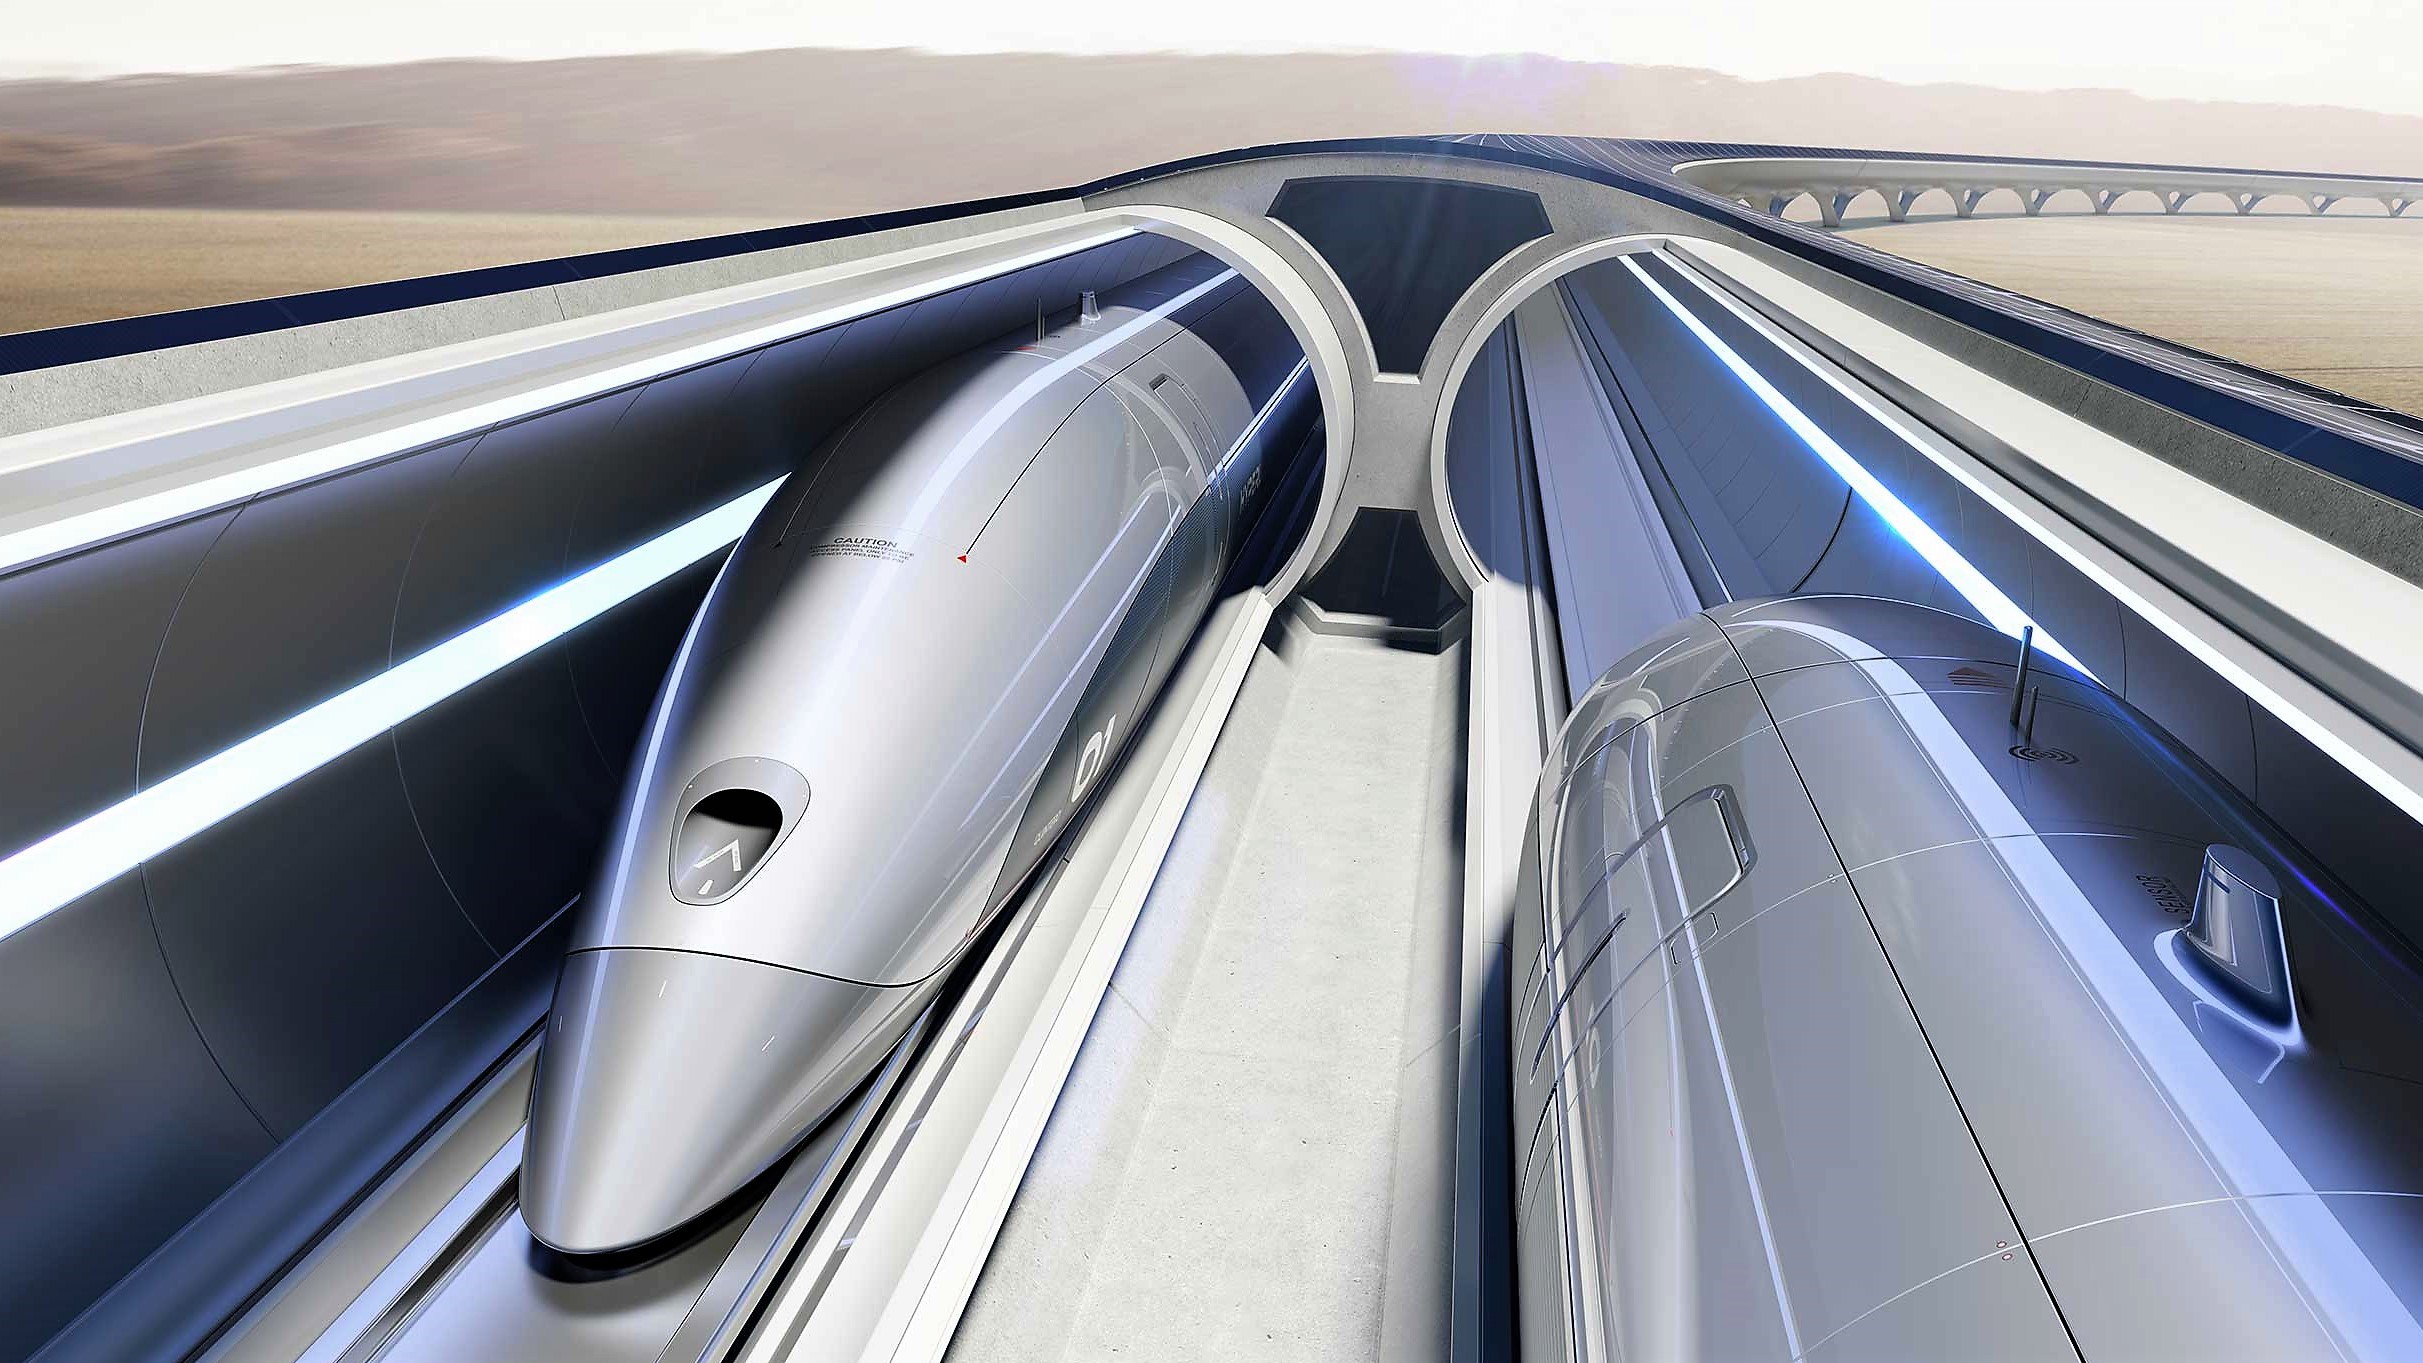 The Slovak government is no longer interested in Hyperloop TT